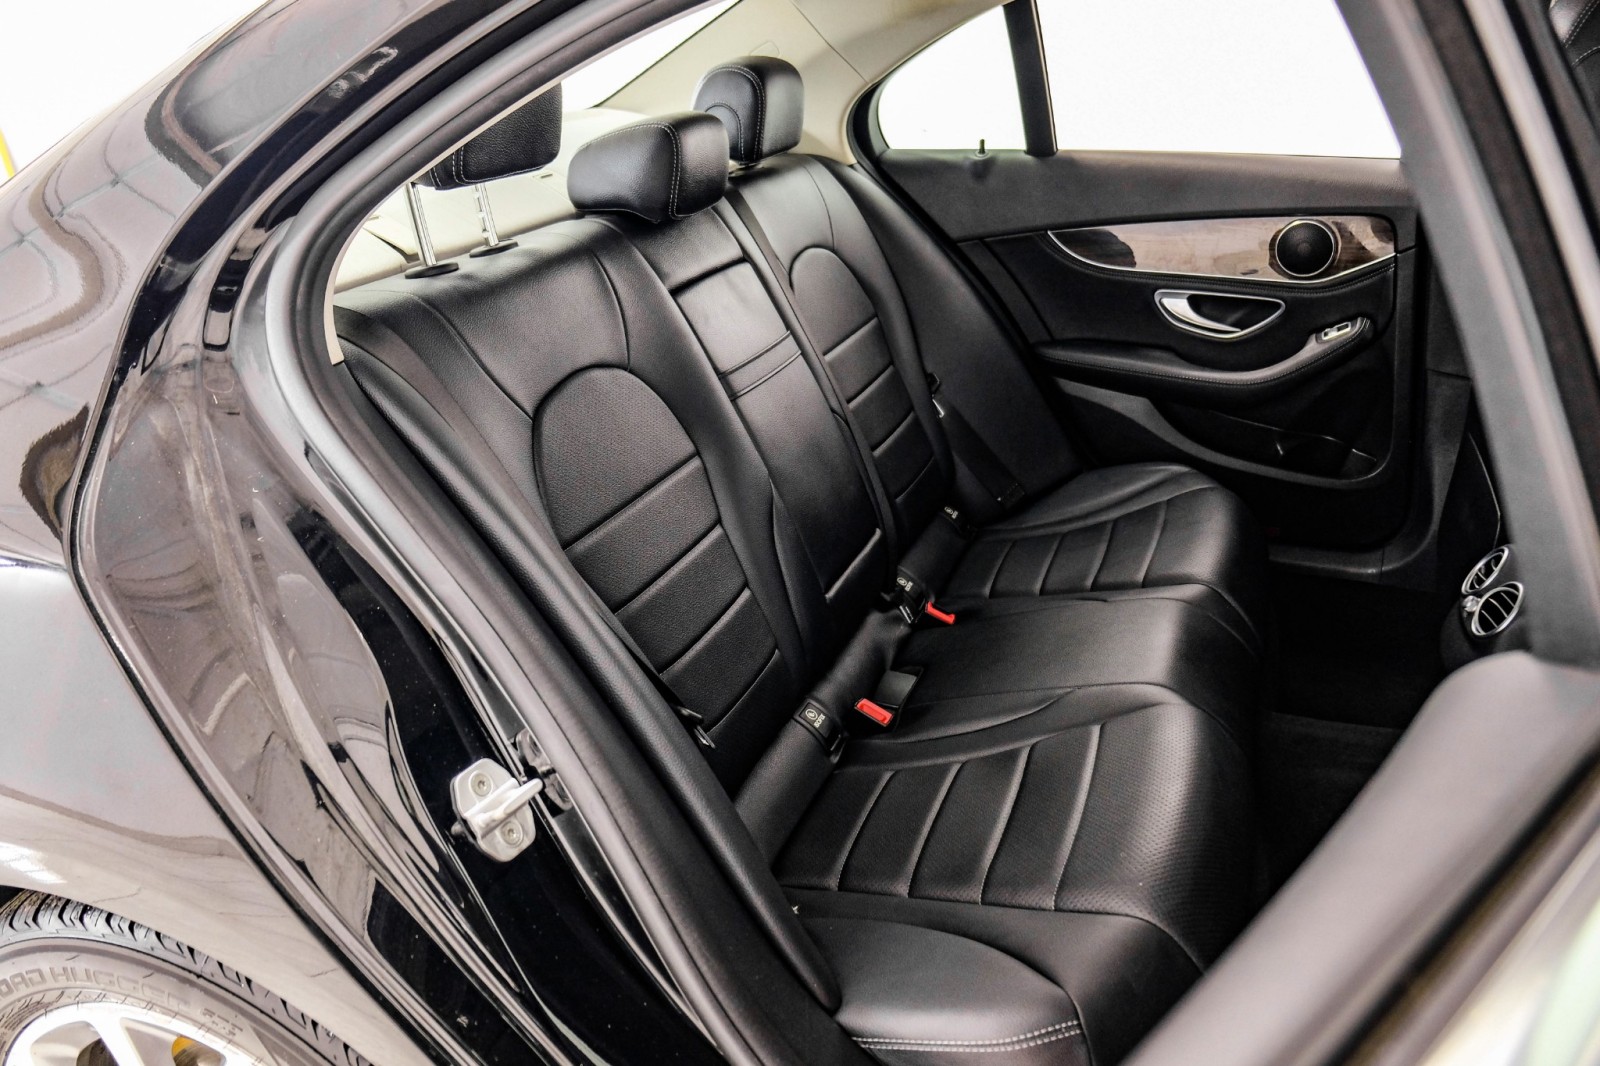 2015 Mercedes-Benz C300 SPORT BLIND SPOT ASSIST NAVIGATION LEATHER SEATS R 35